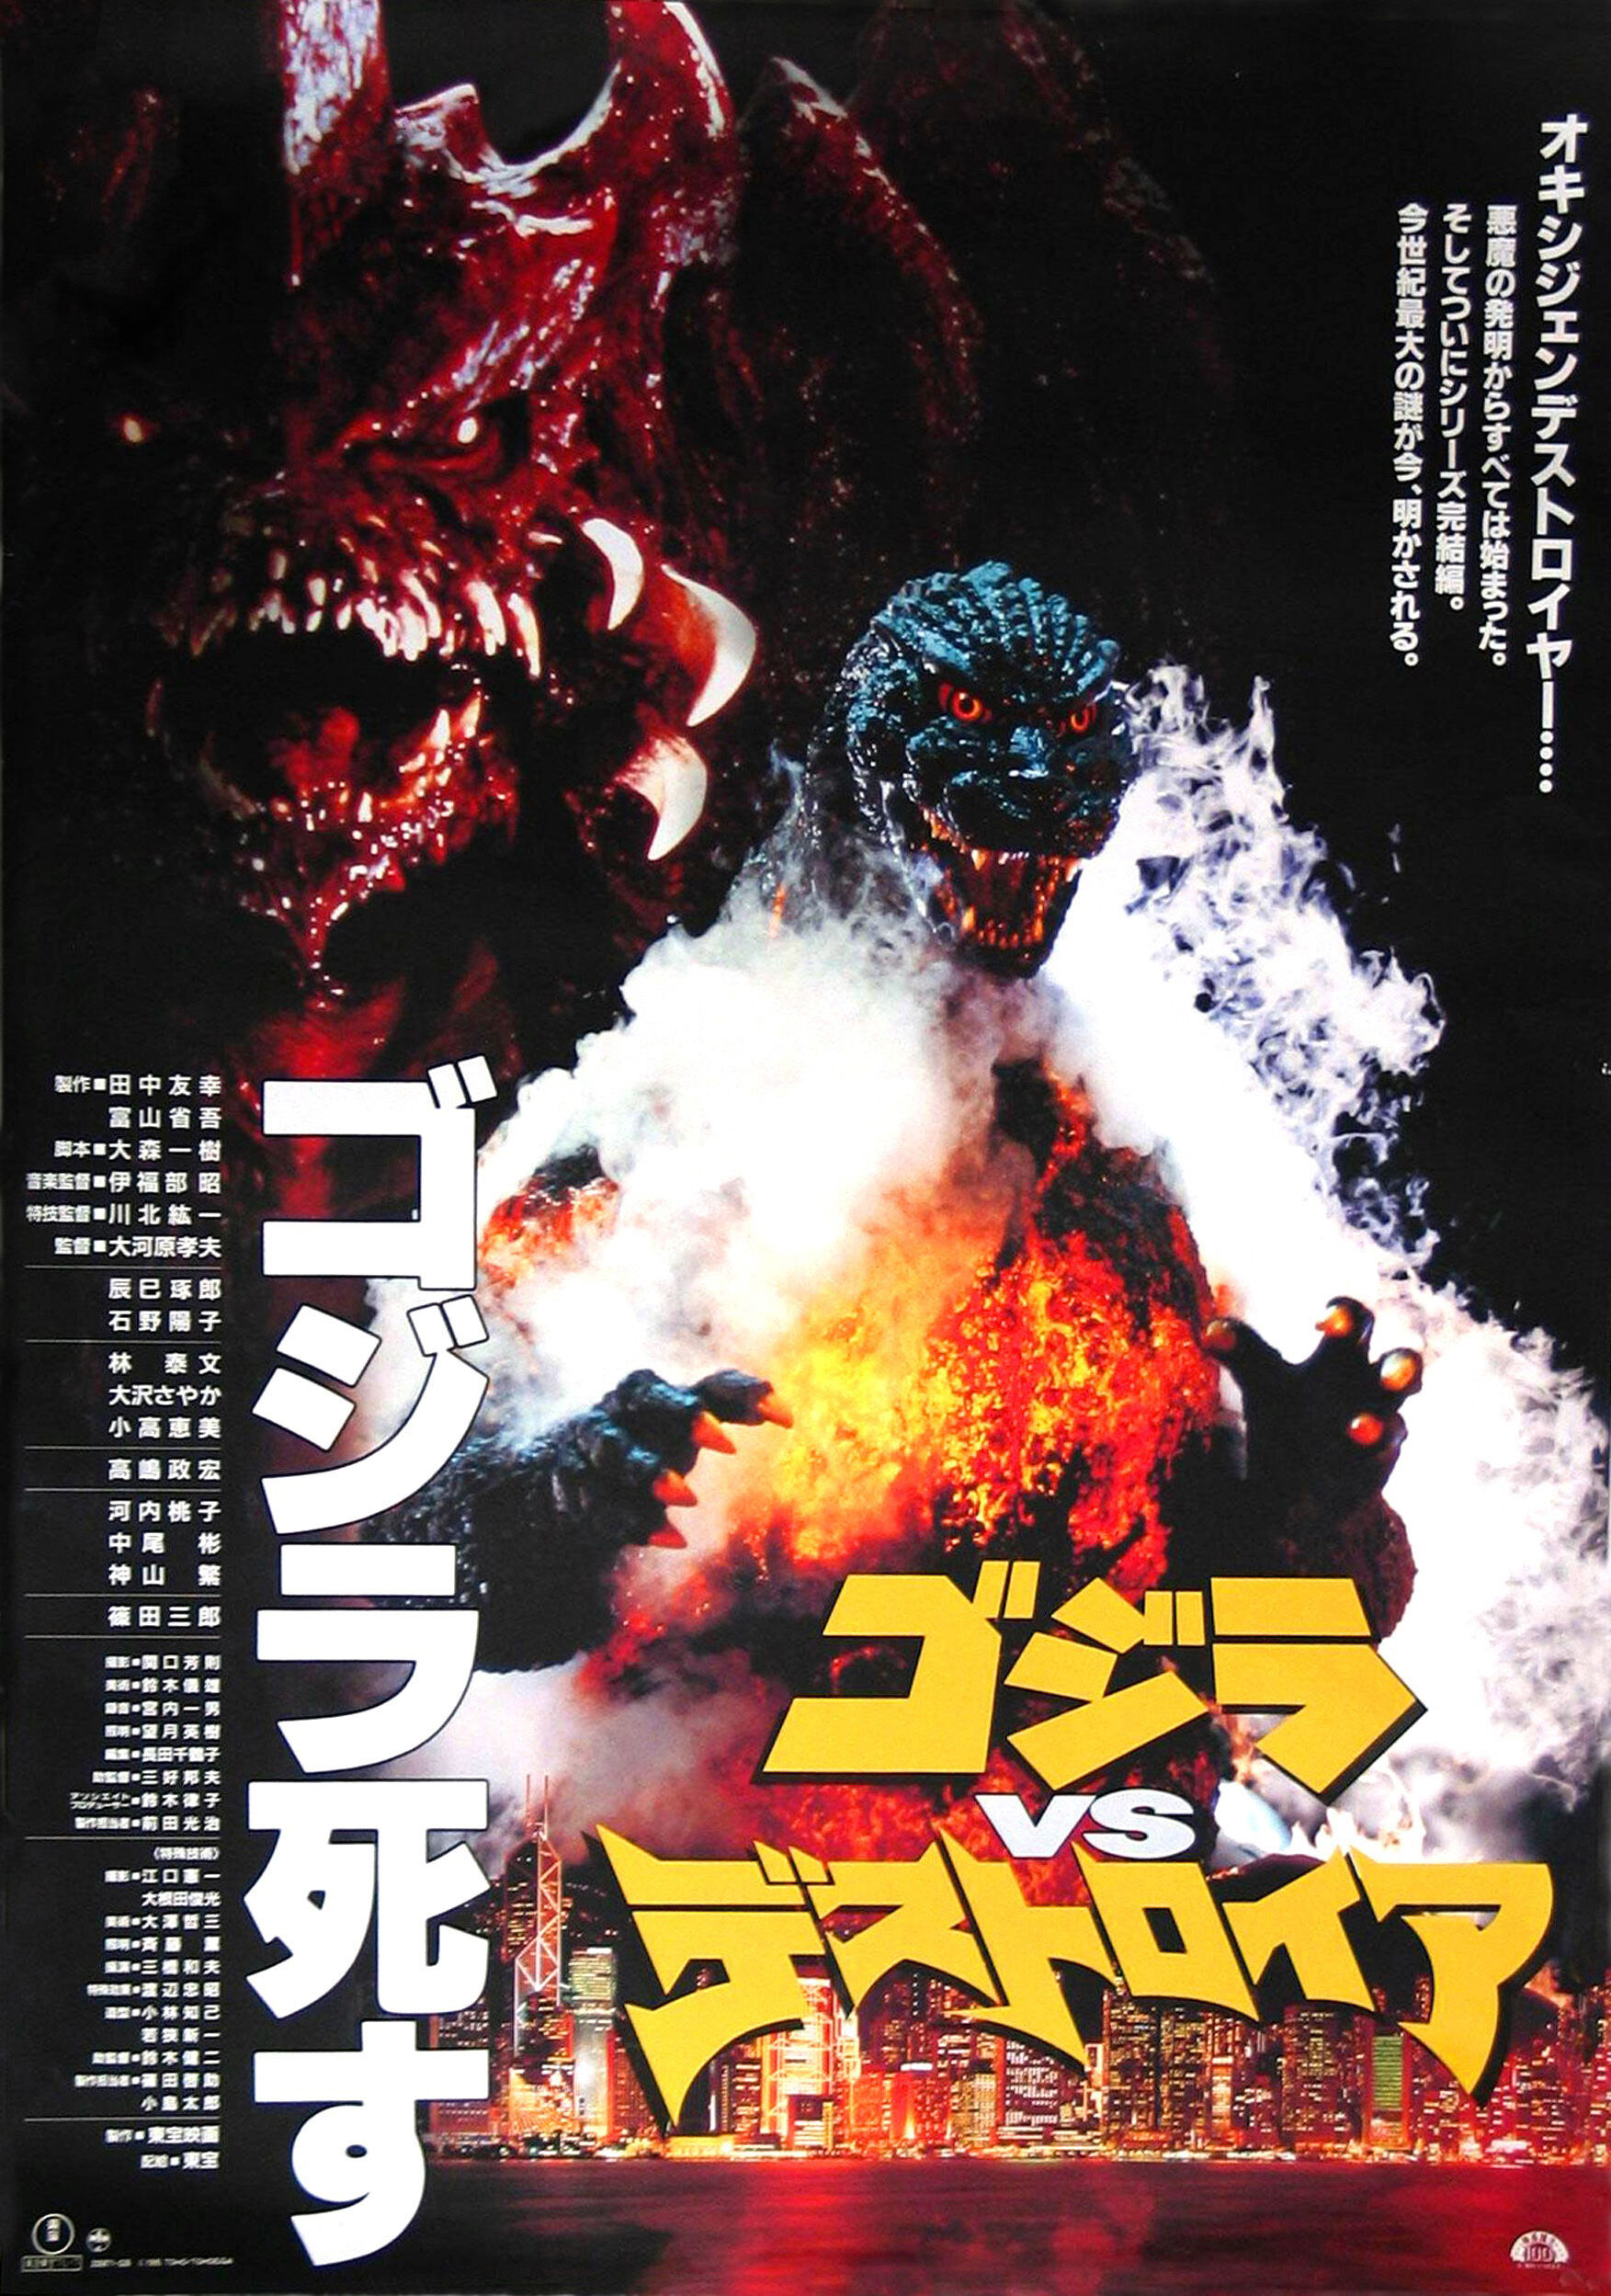 Godzilla vs. Destoroyah (1995) | Soundeffects Wiki | Fandom